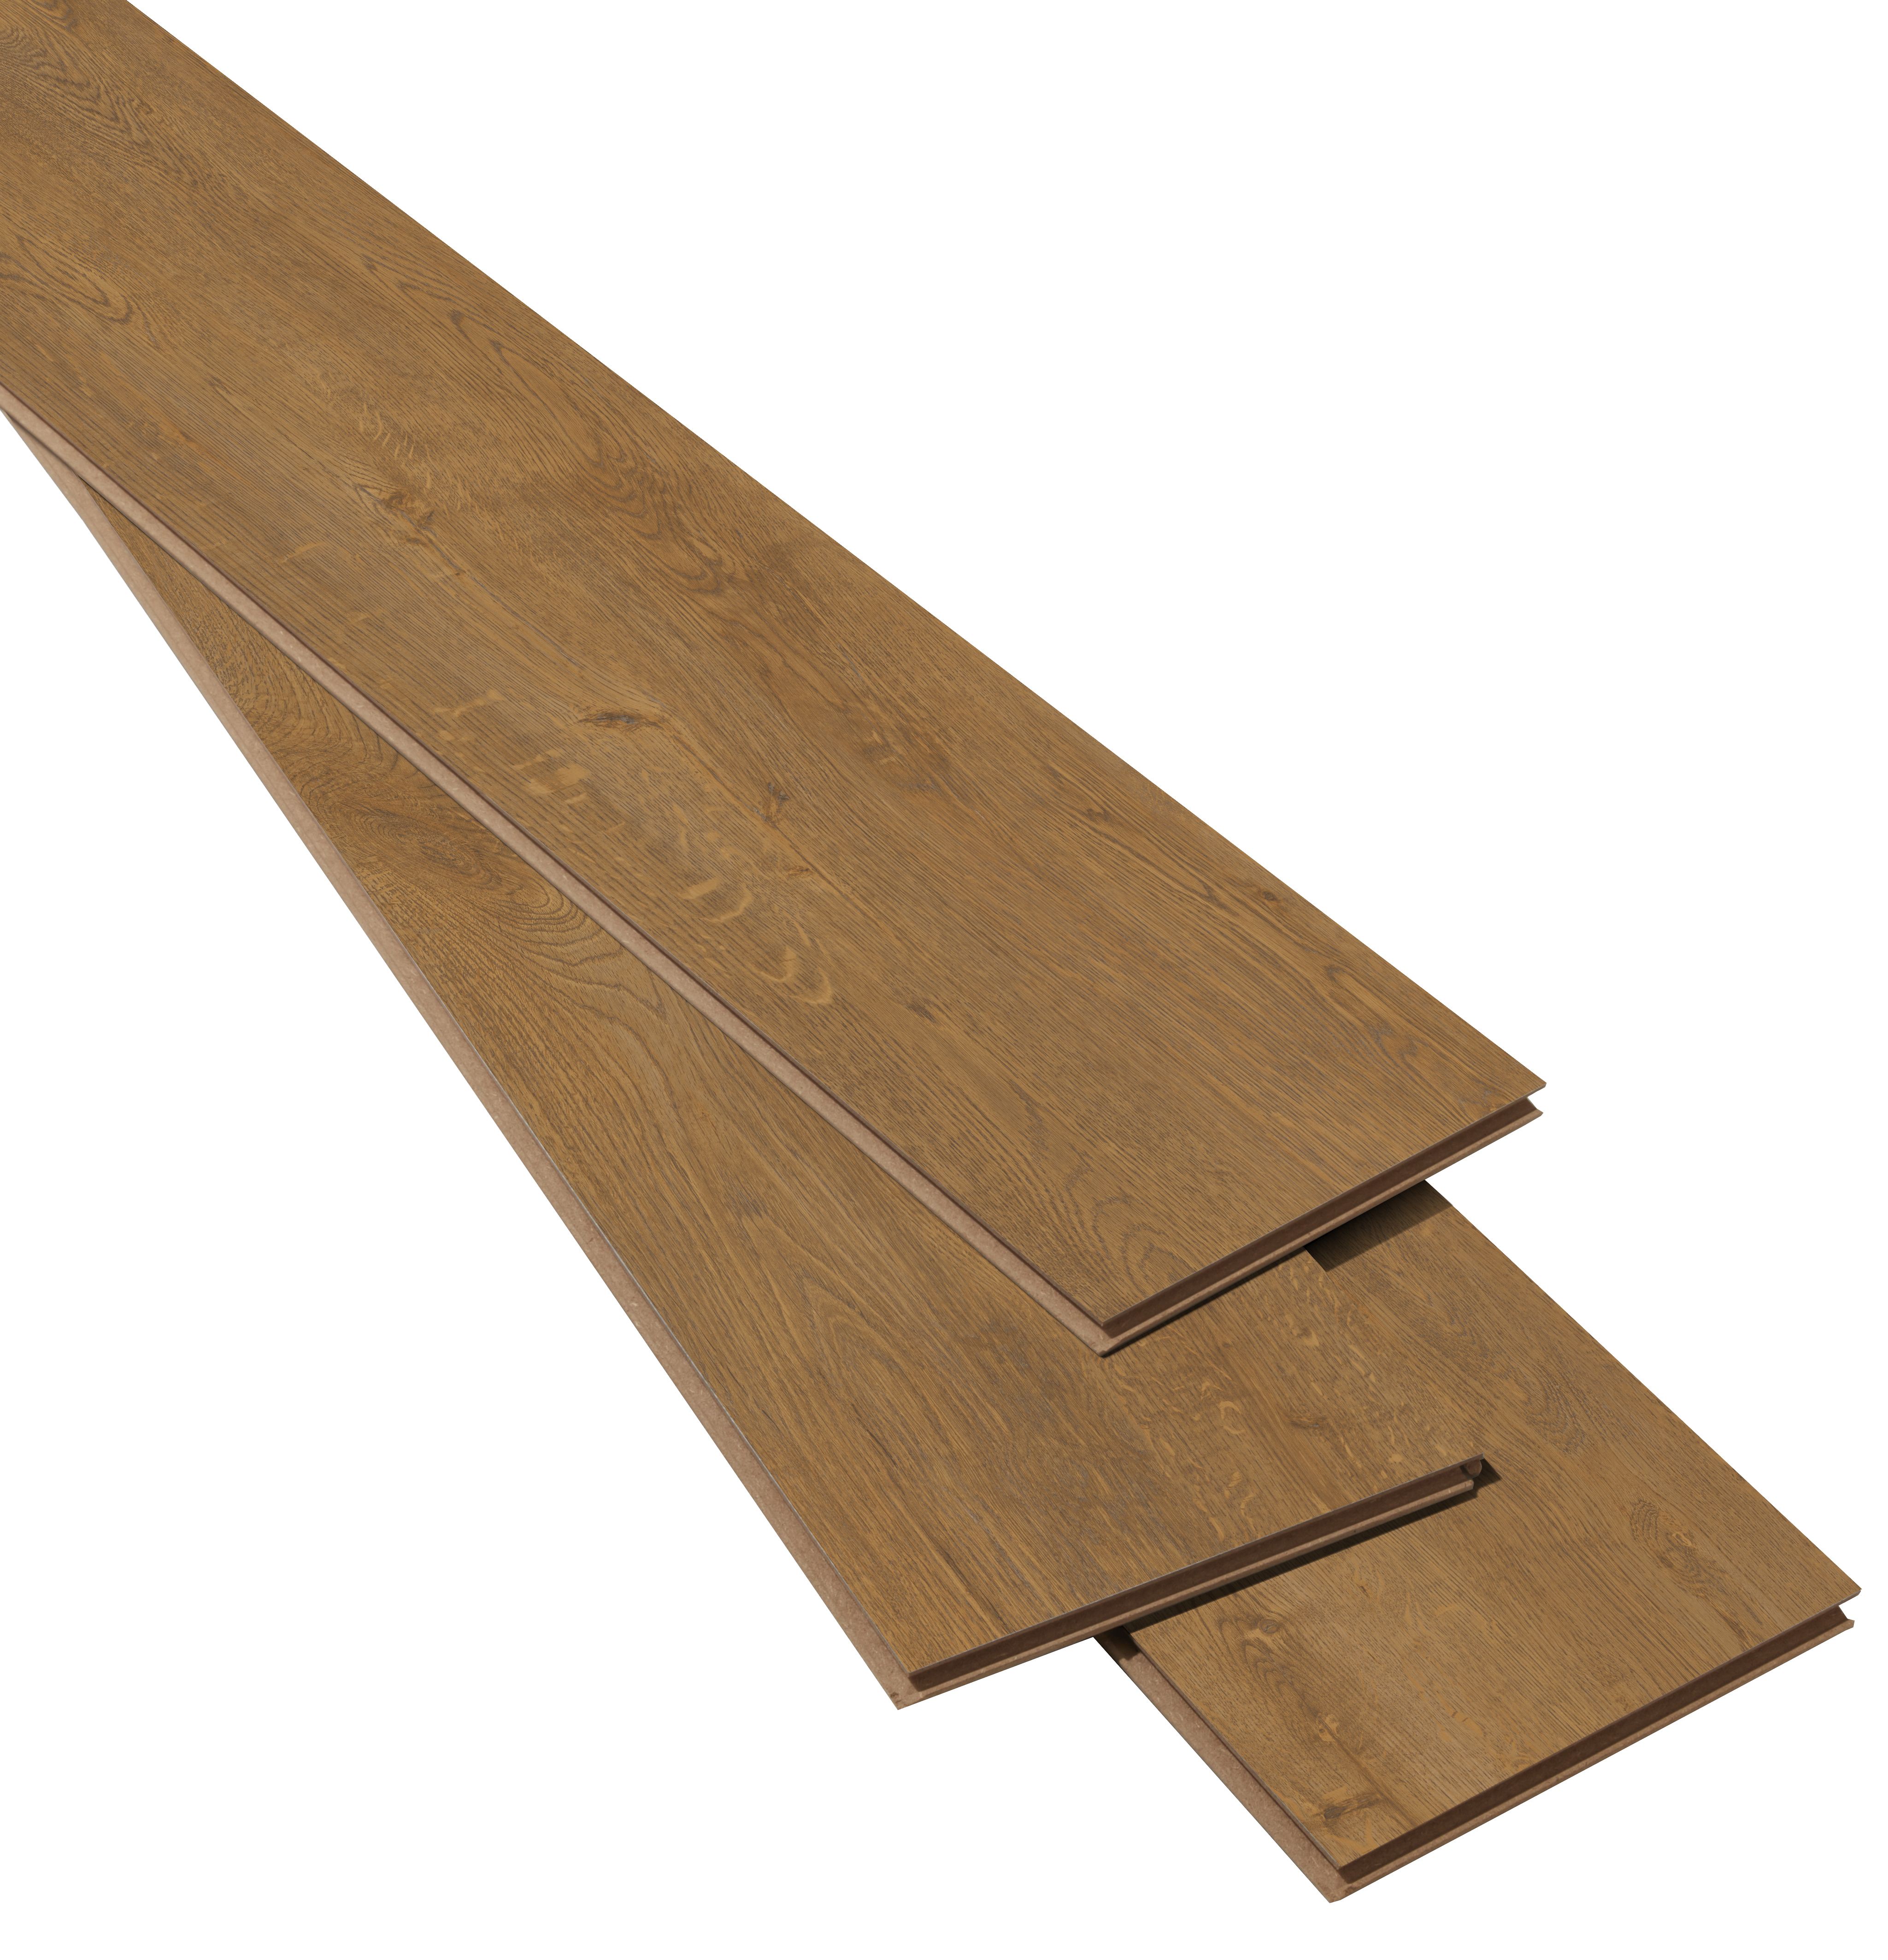 GoodHome Skara Wood effect Laminate Flooring Sample